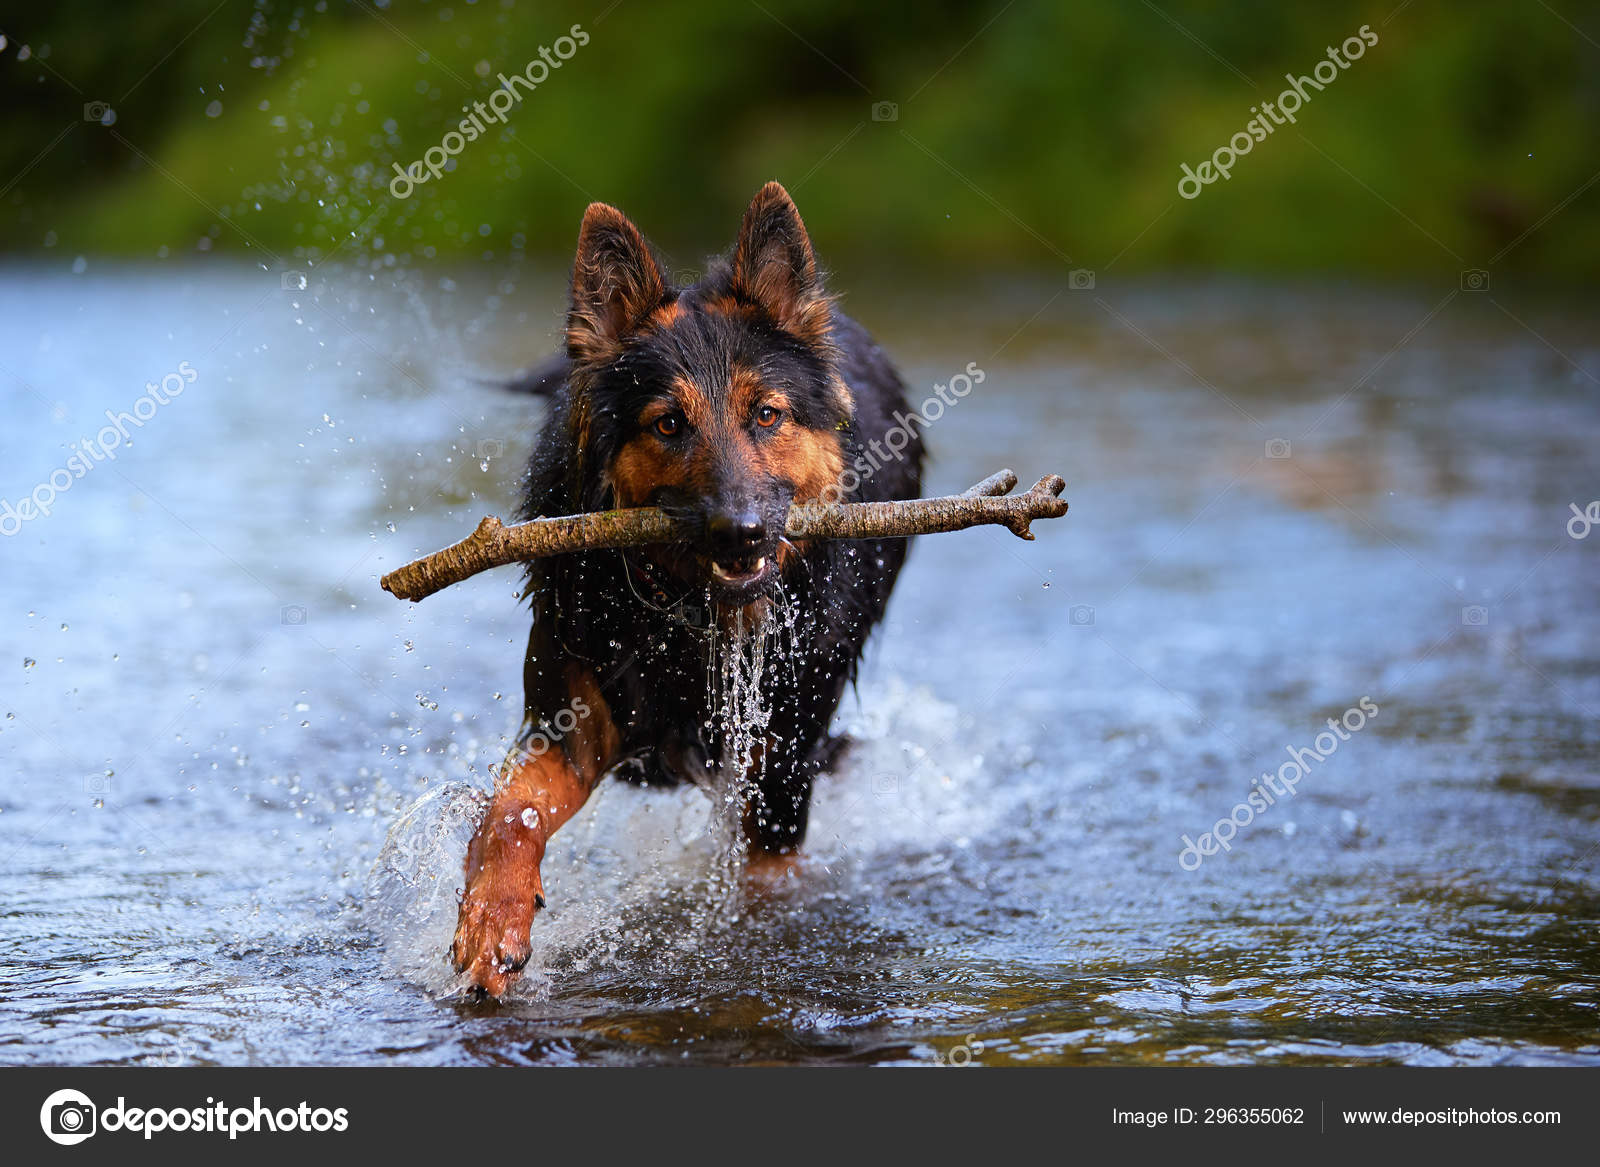 Black Brown Hairy Shepherd Dog Retrieving Stick Splashing Water Actions Stock Photo C Mecan 296355062